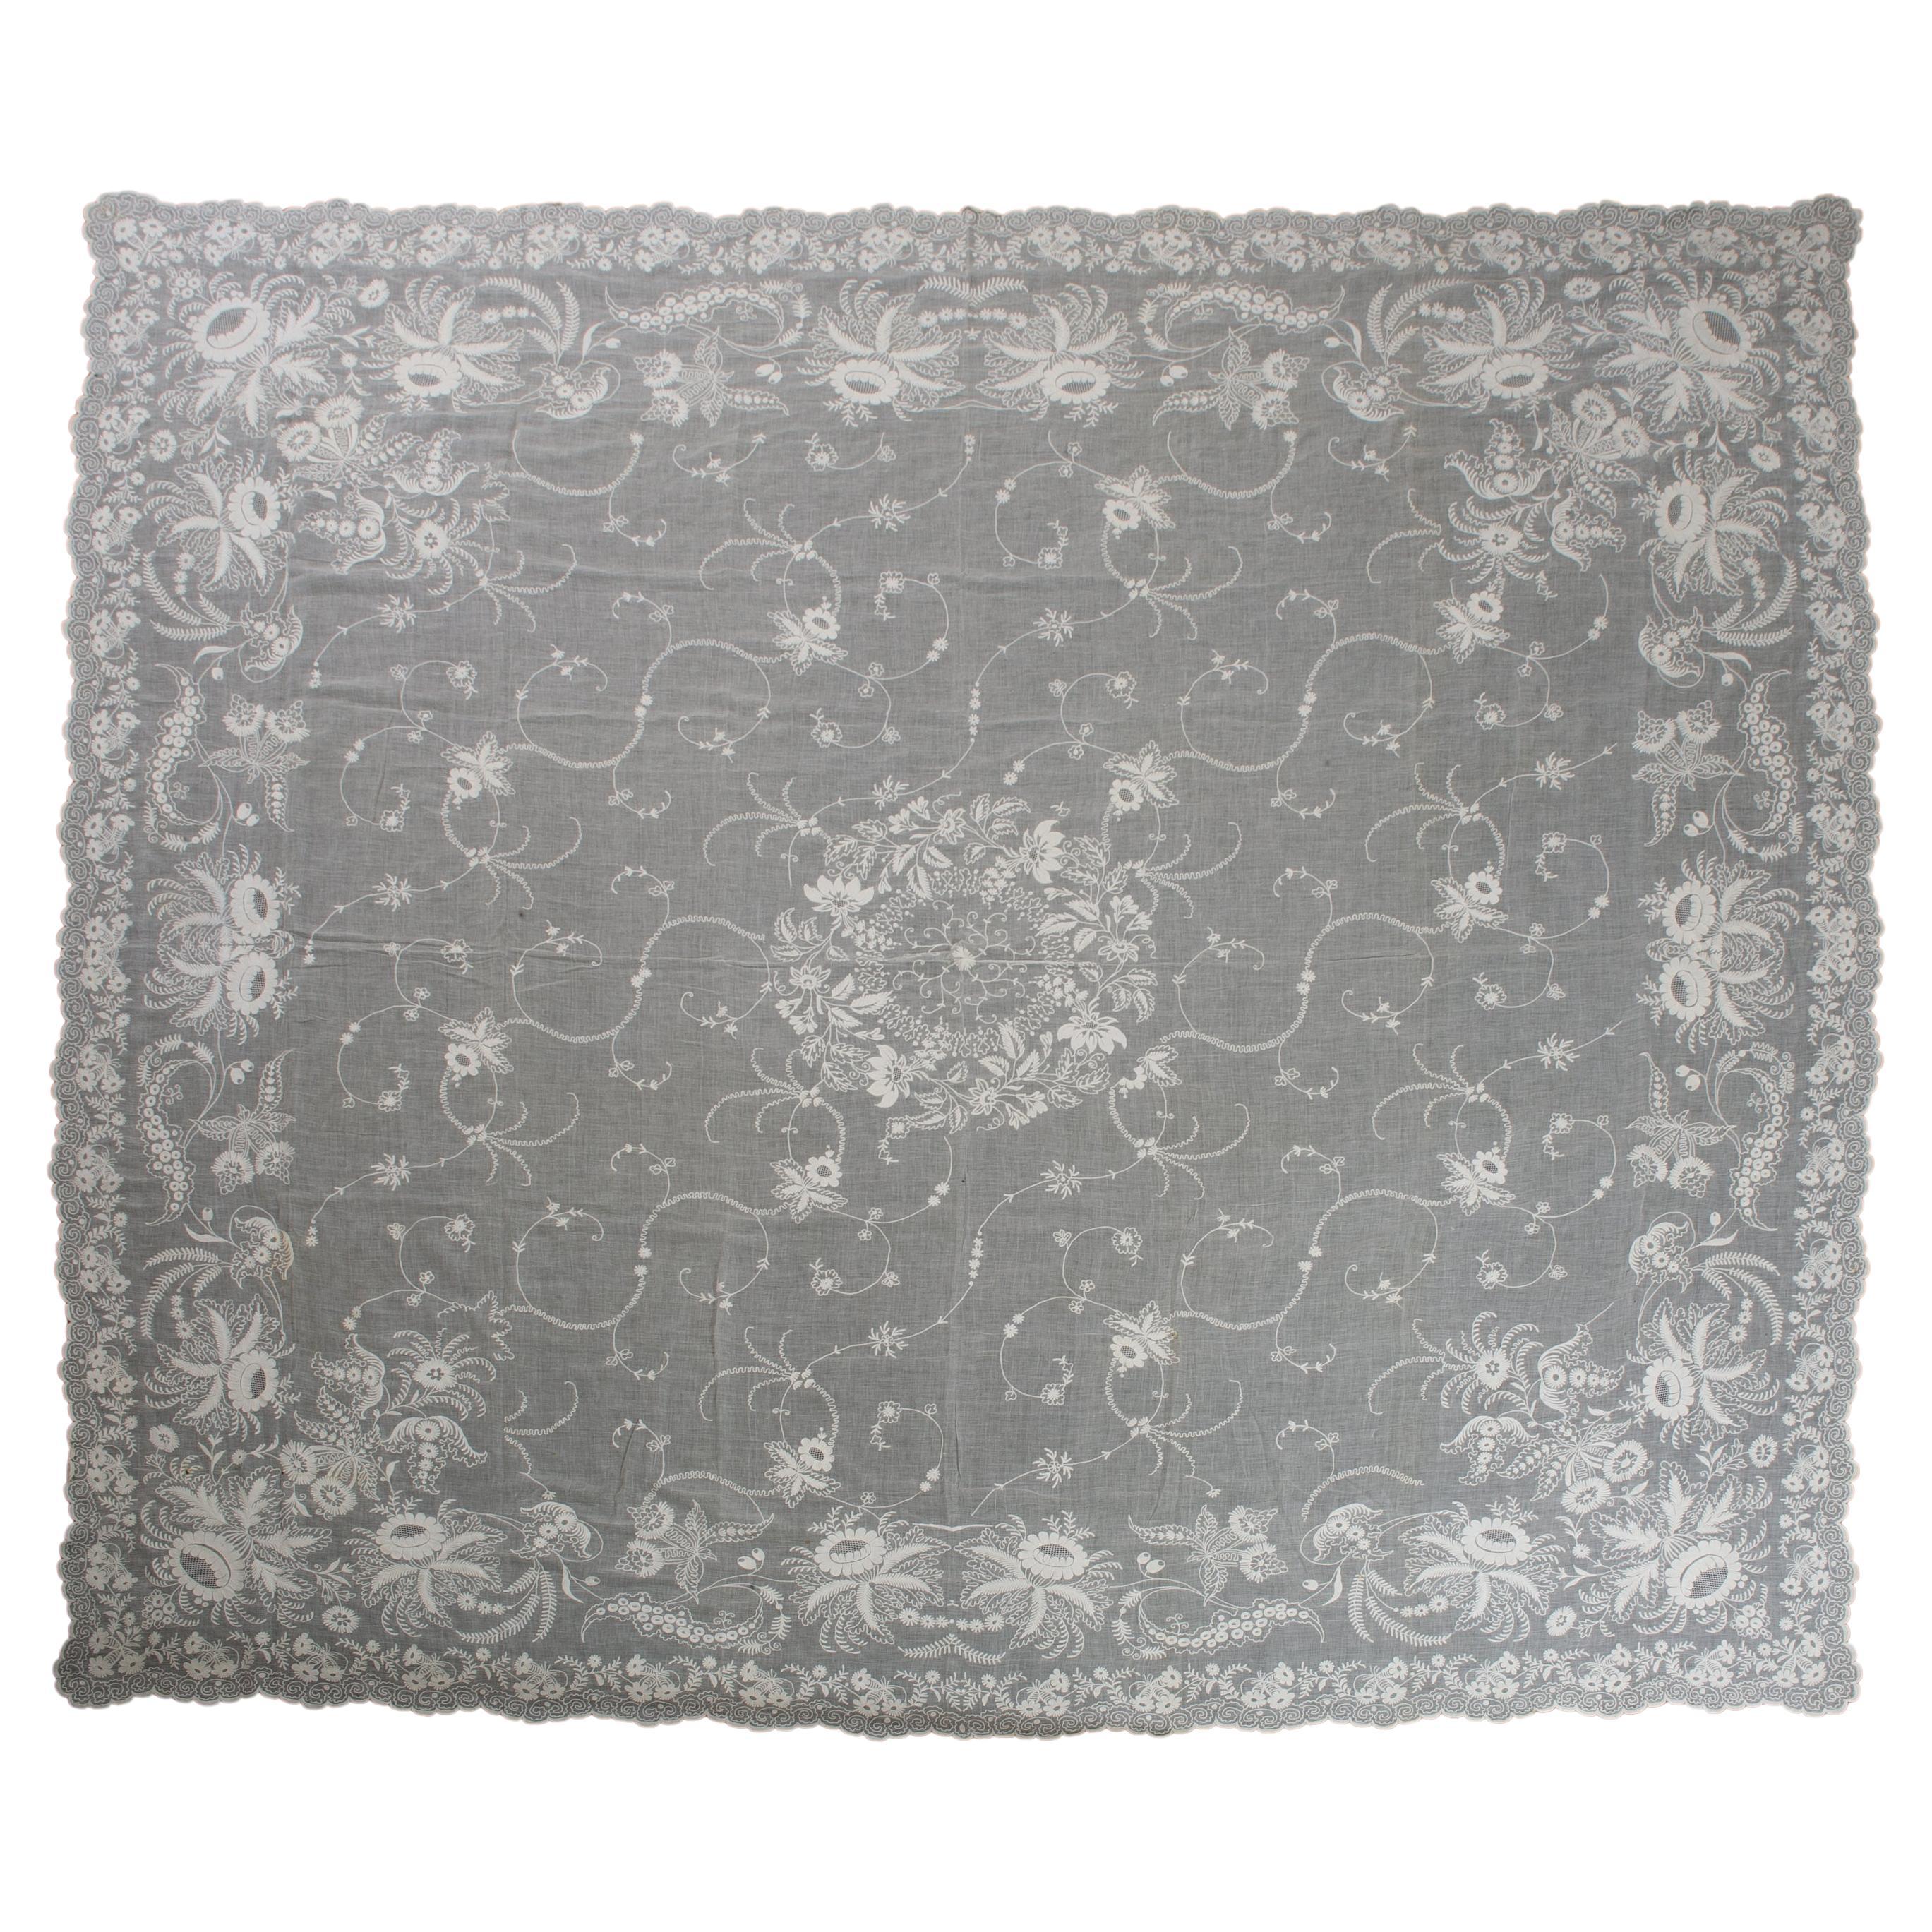 Rare Bed Cover or Tablecloth in Corneline Tissue